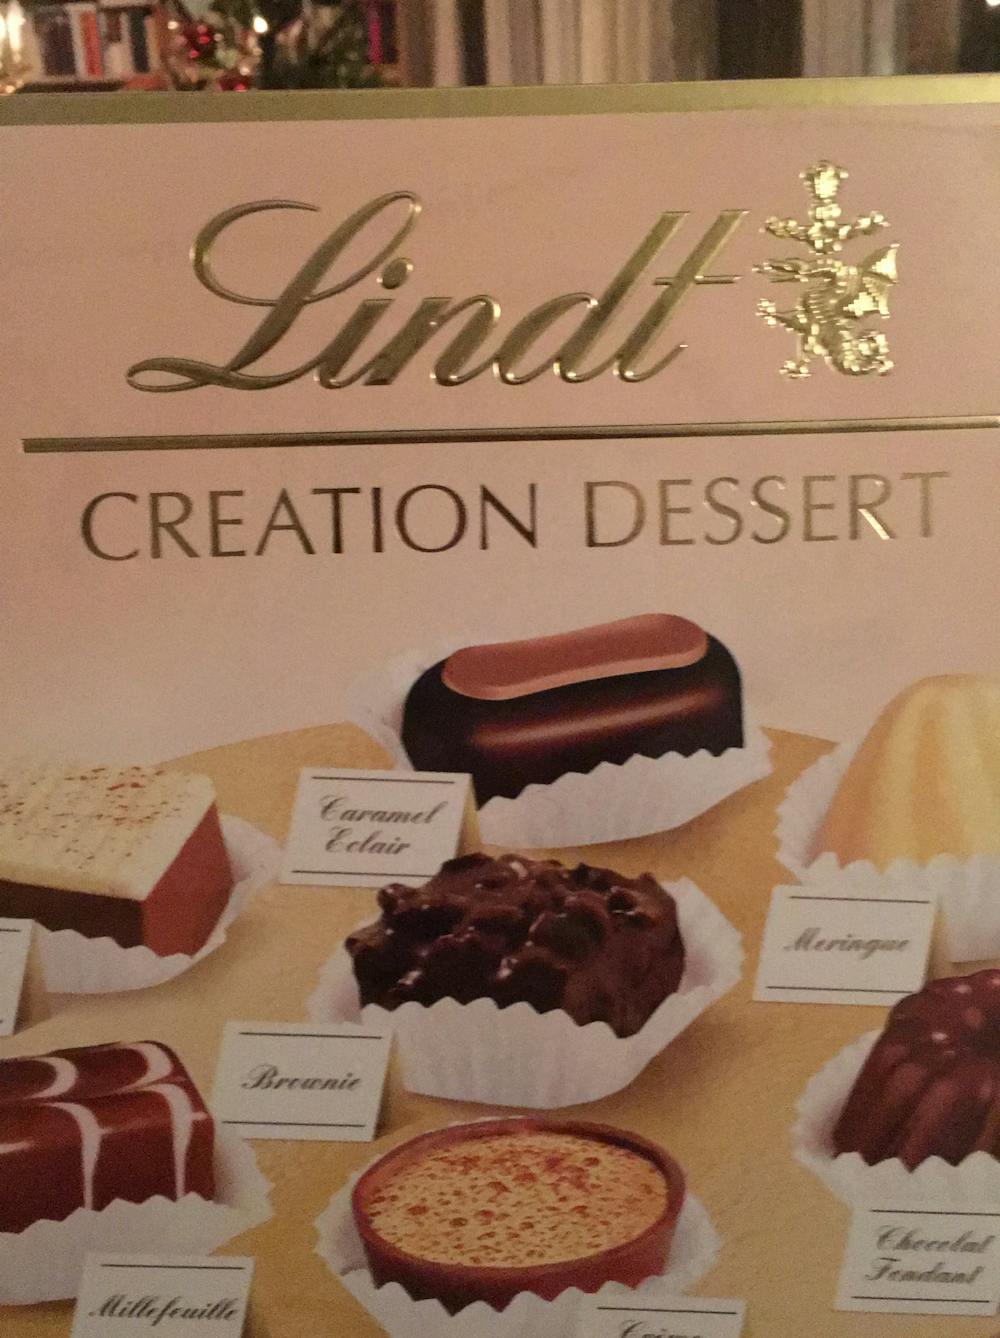 Creation dessert, Lindt